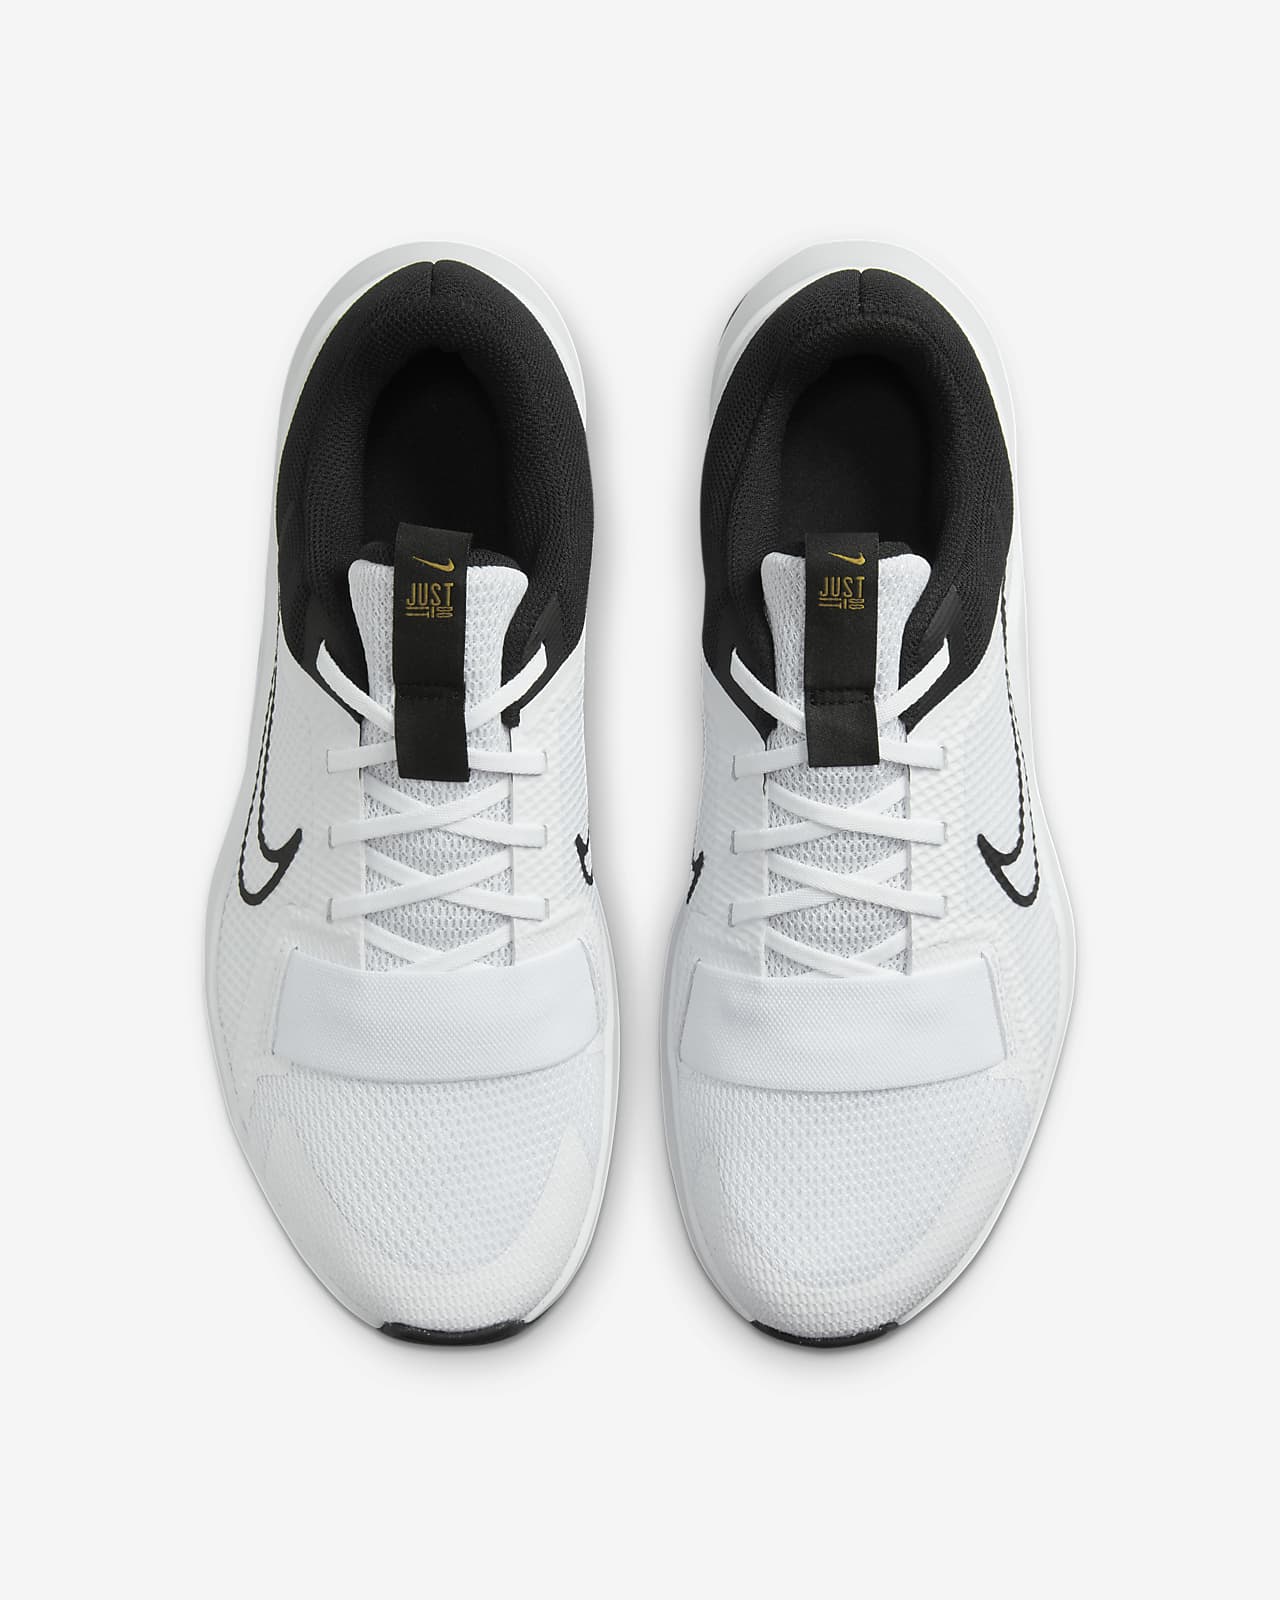 Nike MC Trainer 2 Men's Training Shoes